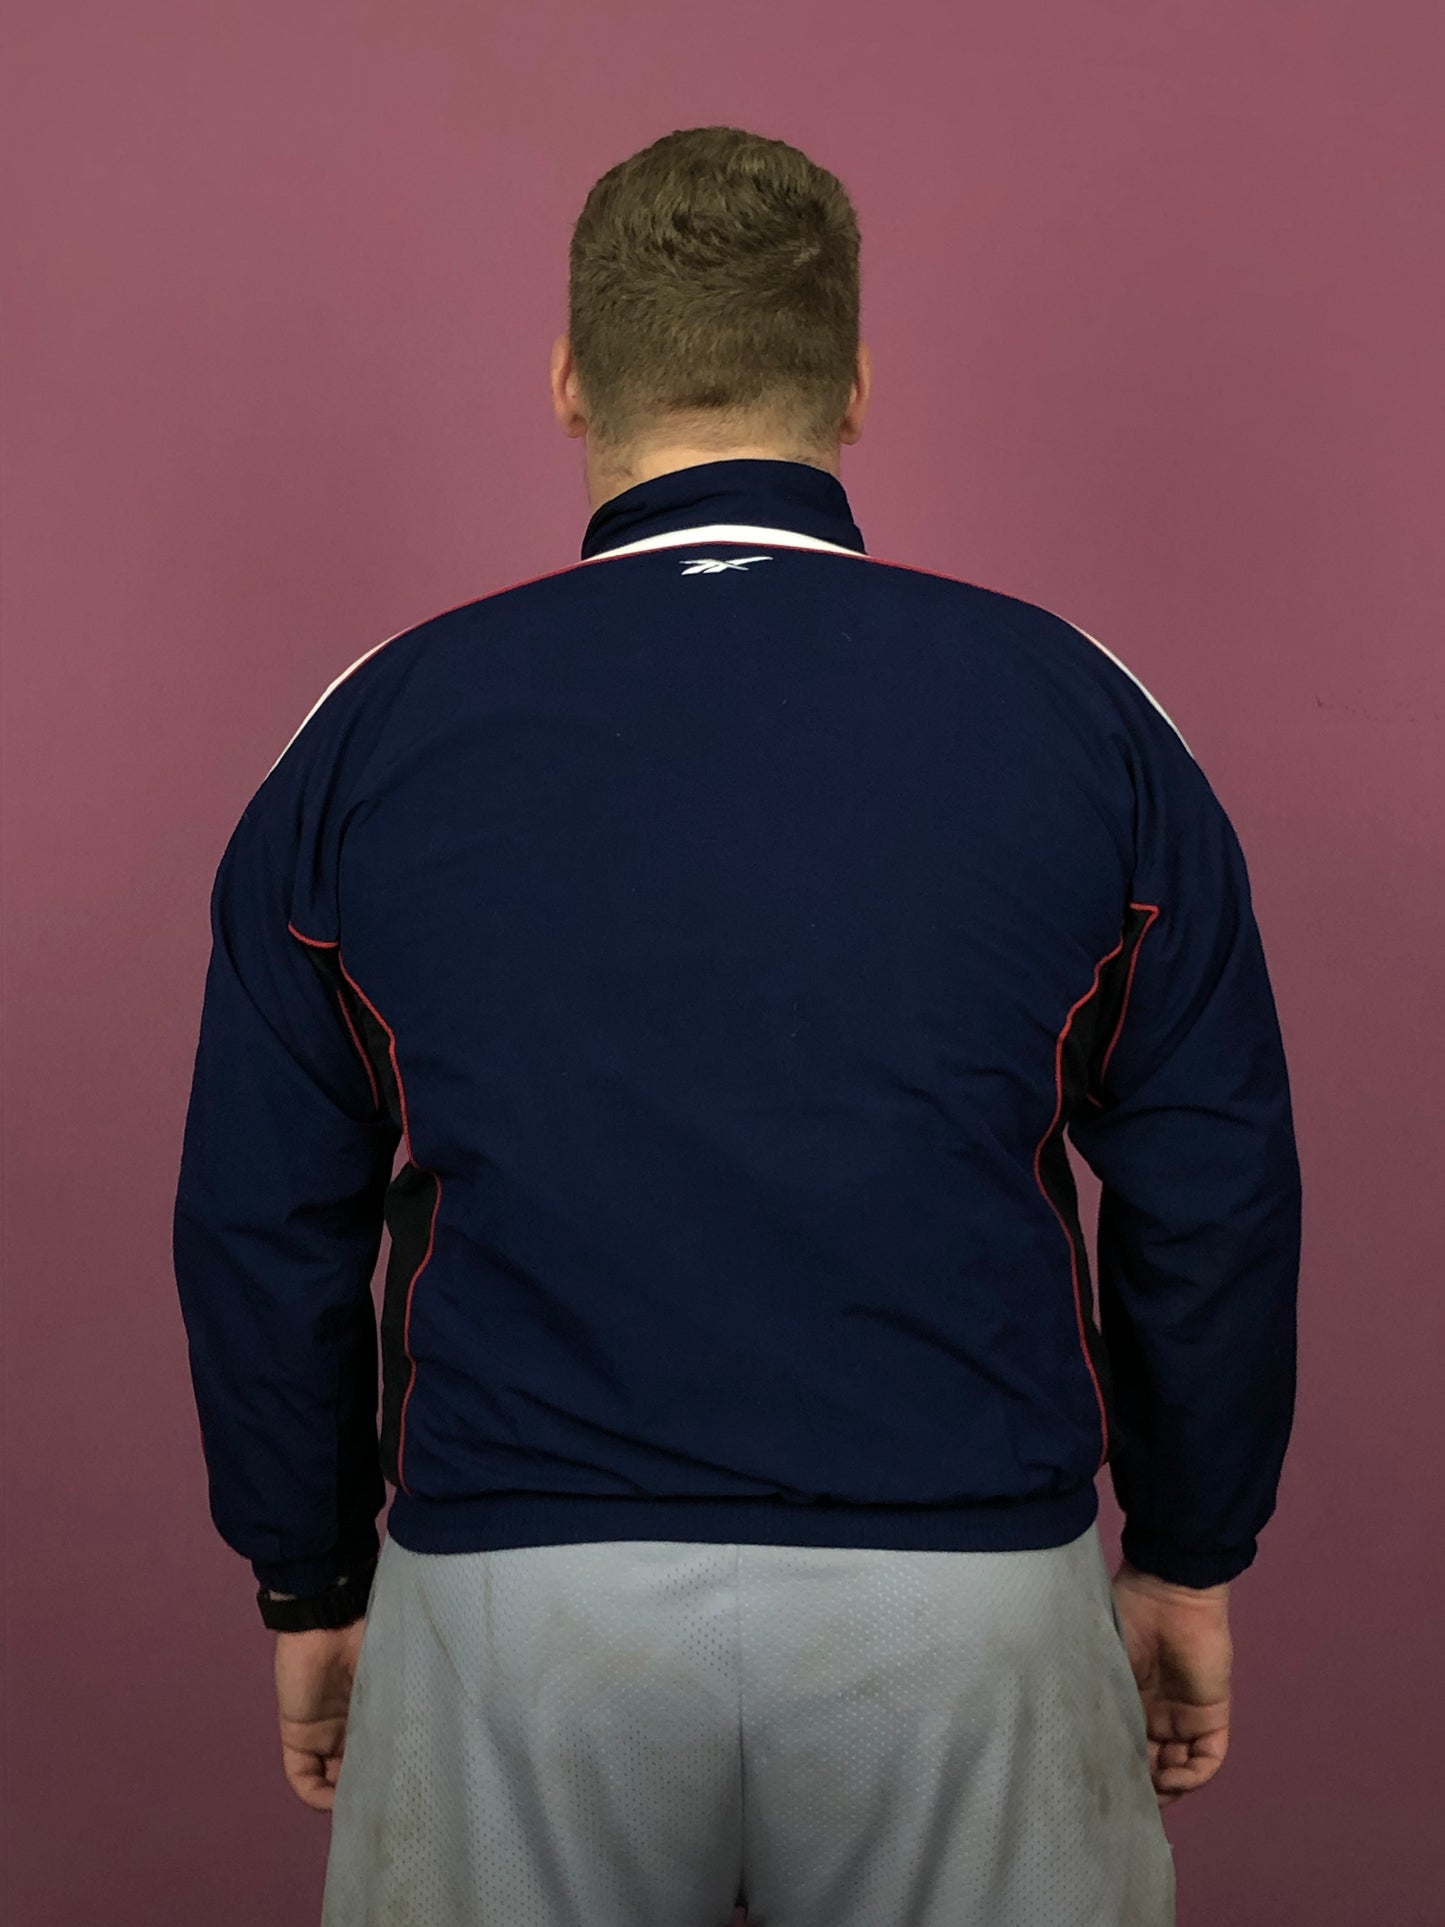 90s Reebok Vintage Men's Windbreaker Jacket - Large Navy Blue Polyeste